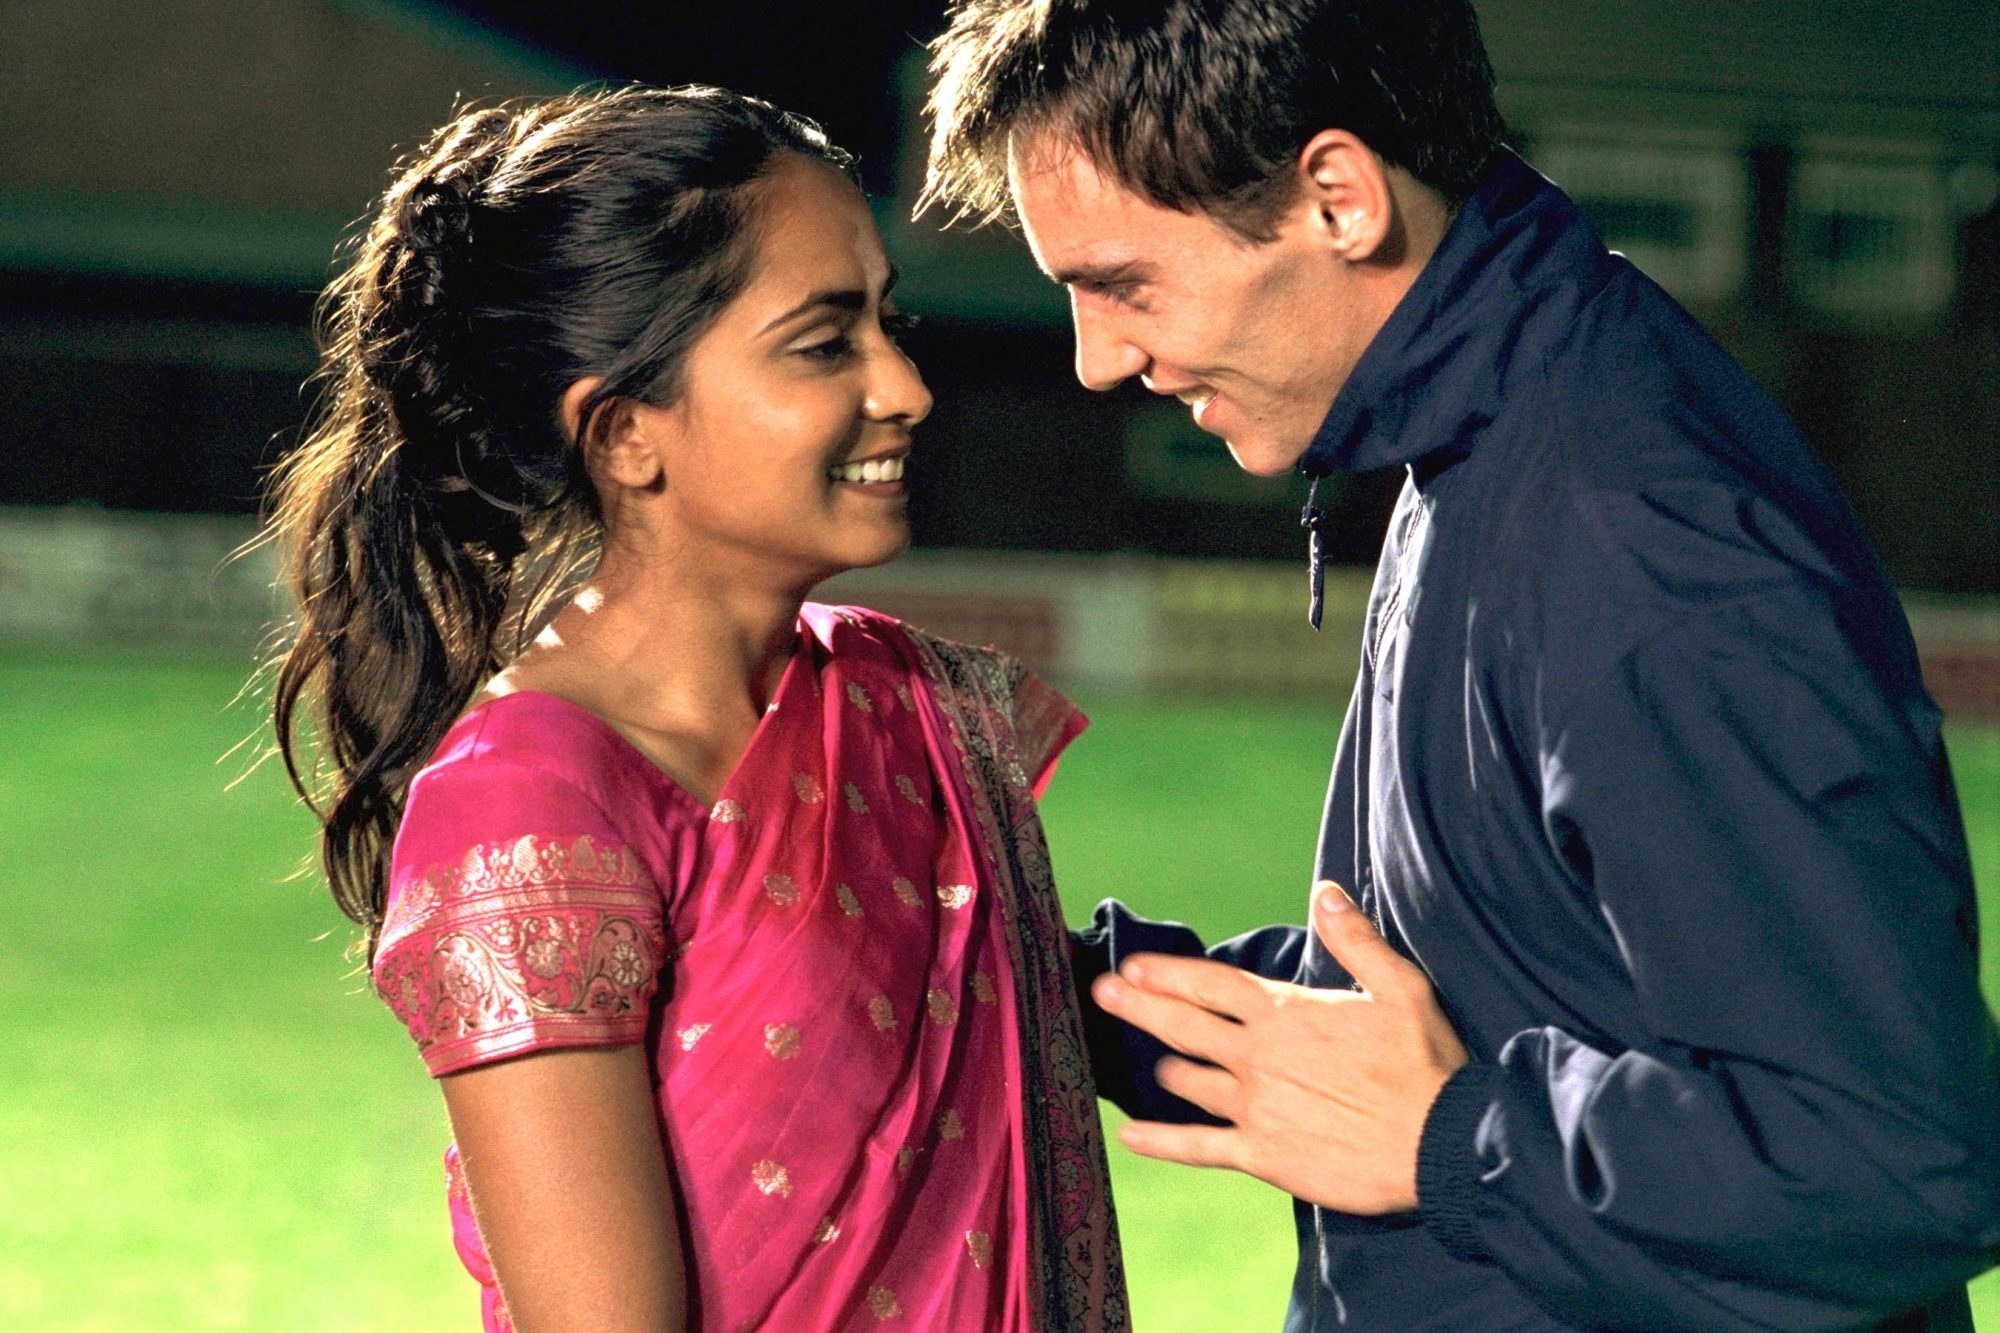 Jess wearing an Indian sari while talking to Coach Joe on a football field